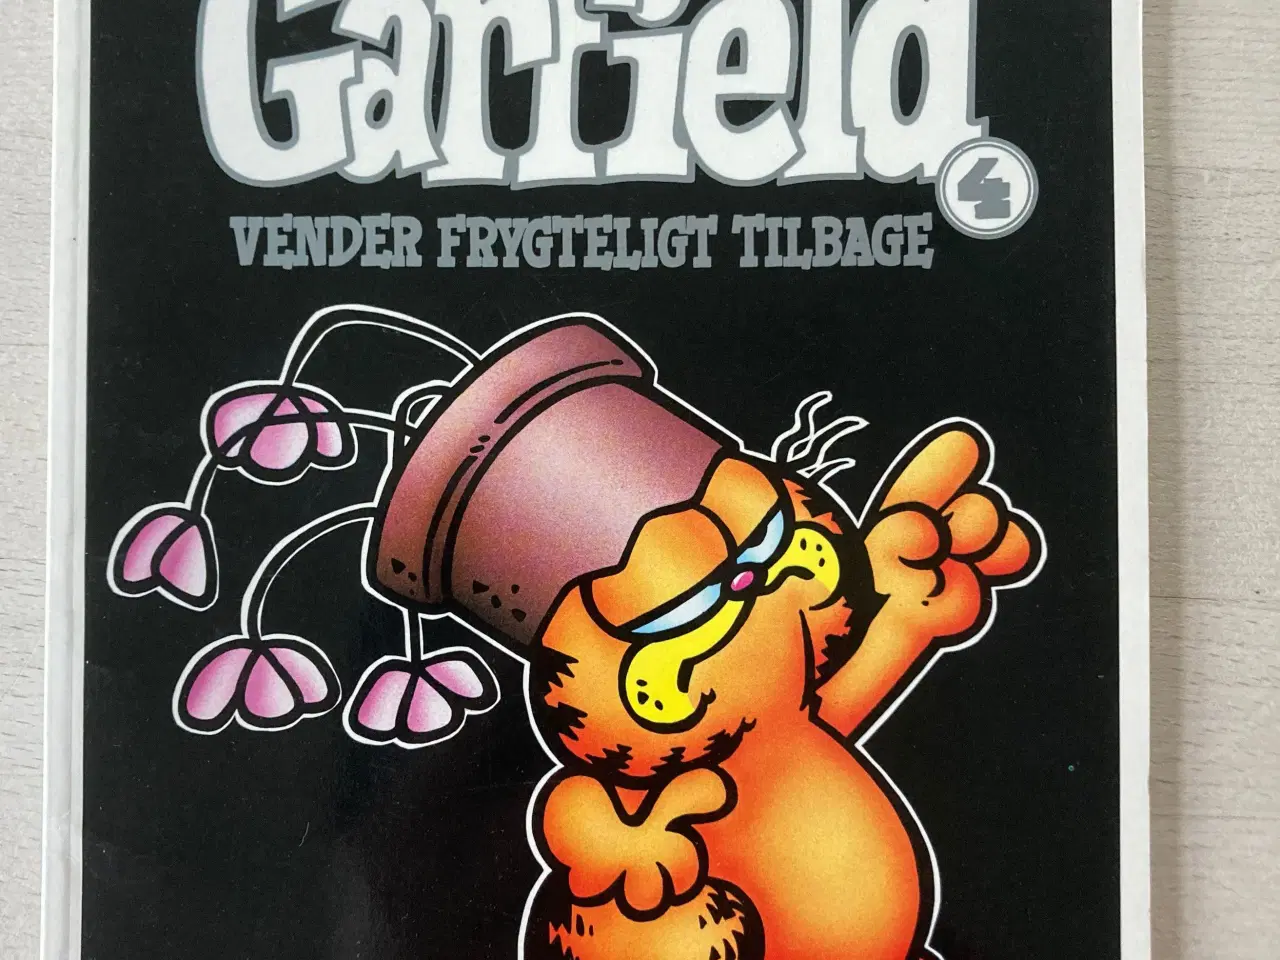 Billede 1 - Garfield vender frygteligt tilbage, nr 4